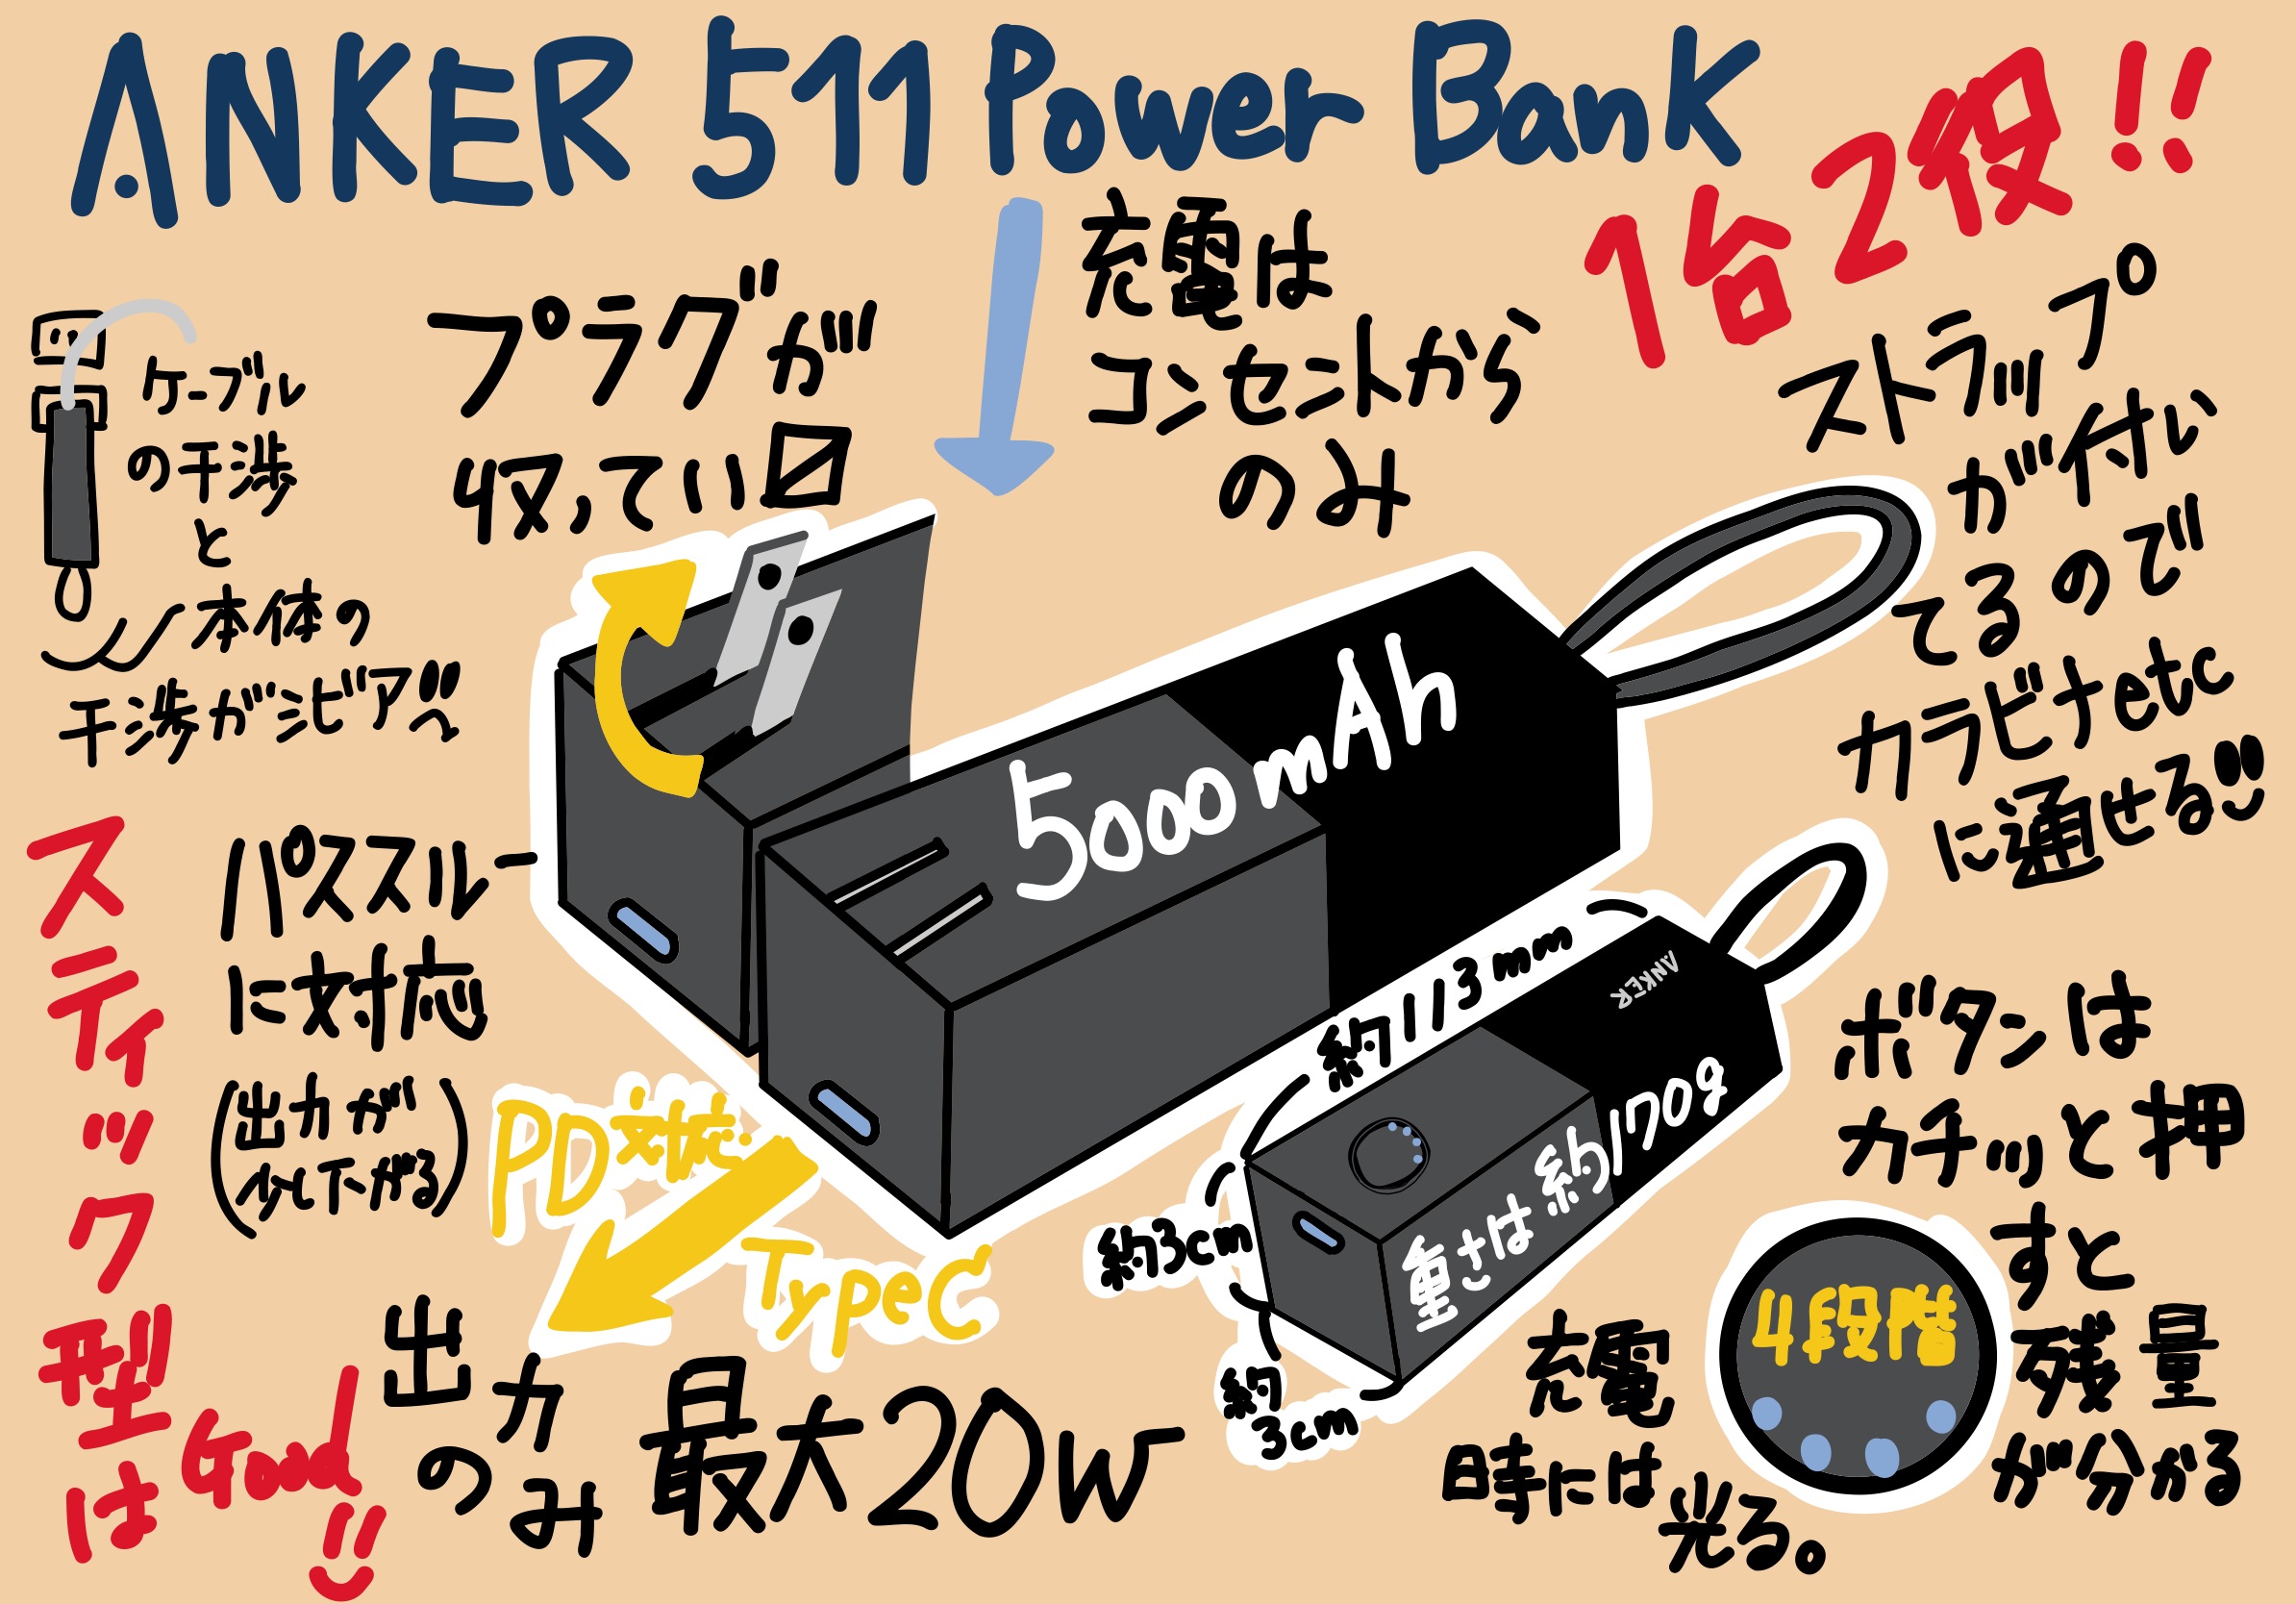 ANKER 511 Power Bank スティック型の1台2役の 今までなかった新鮮なモバイルバッテリー兼充電器 レビュー